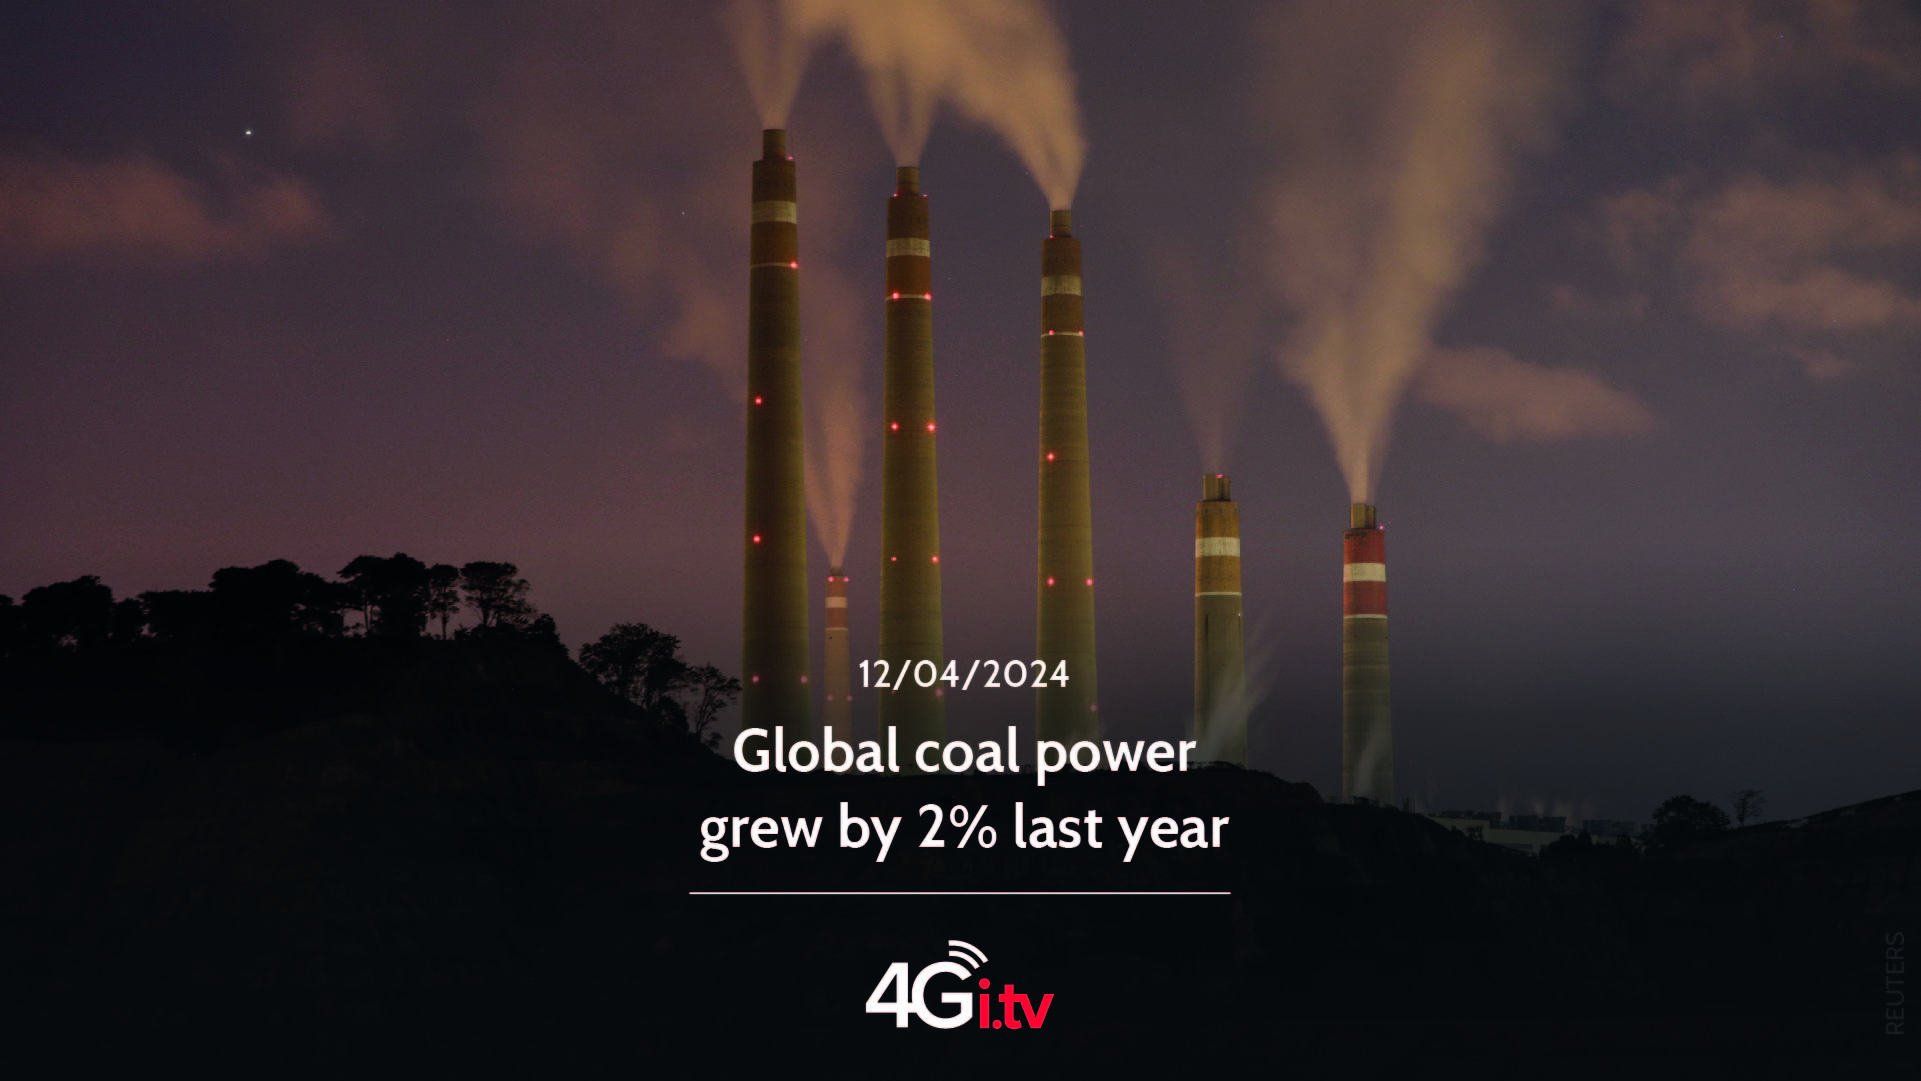 Подробнее о статье Global coal power grew by 2% last year 